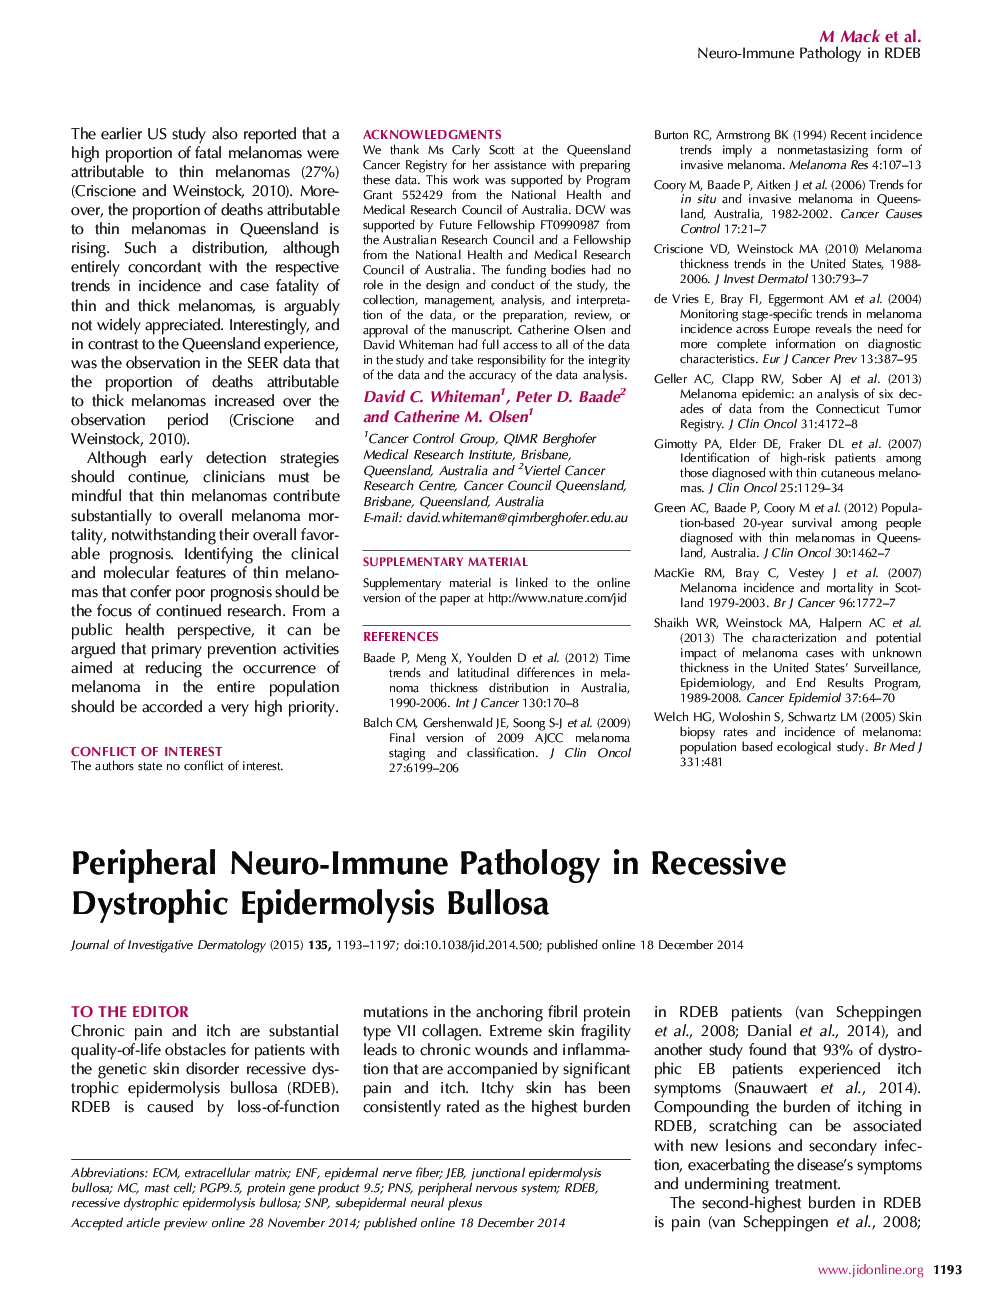 Peripheral Neuro-Immune Pathology in Recessive Dystrophic Epidermolysis Bullosa